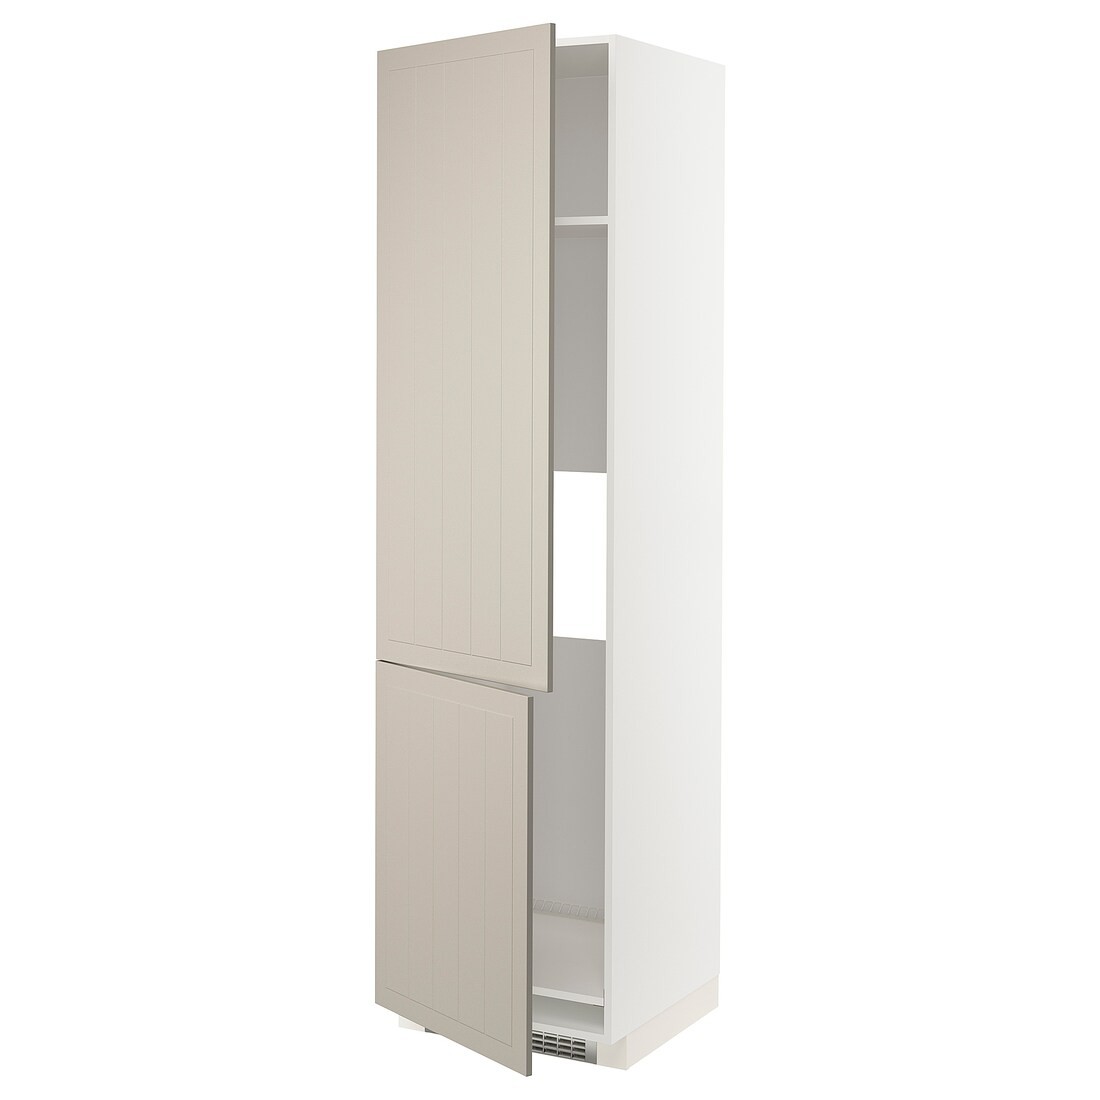 METOD МЕТОД Высокий шкаф для холодильника / морозильника / 2дверцы, белый / Stensund бежевый, 60x60x220 см